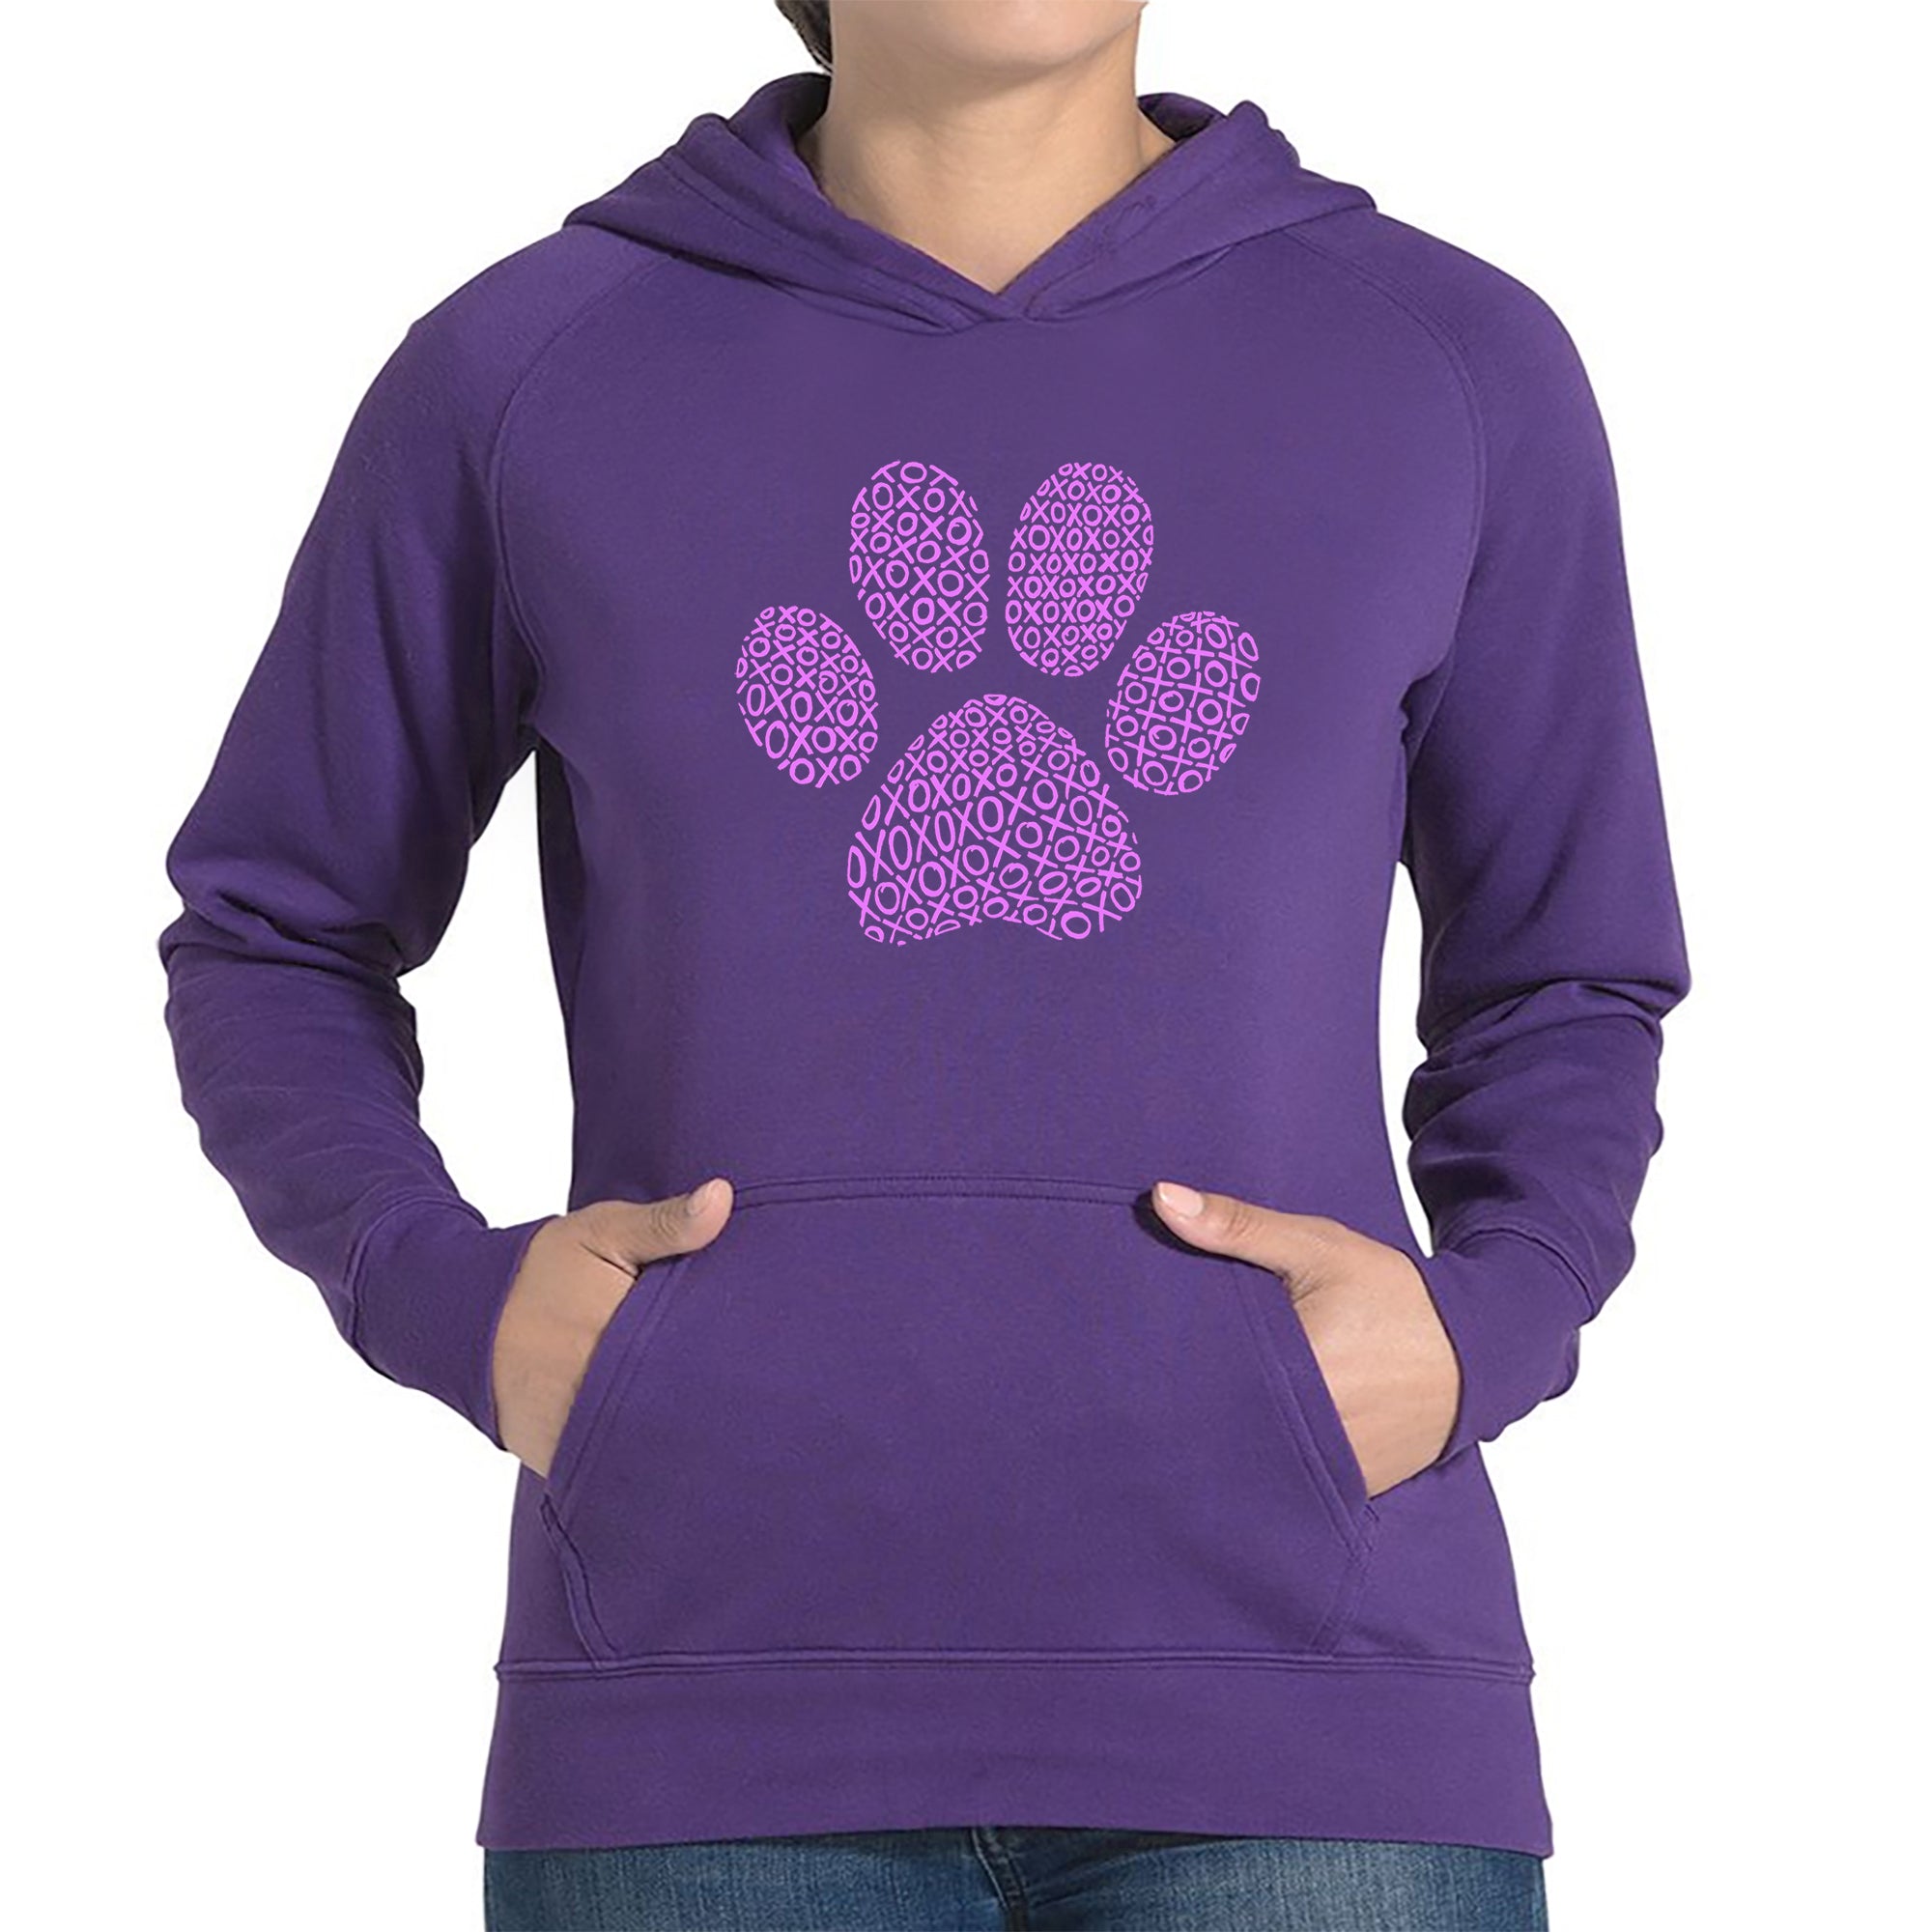 XOXO Dog Paw - Women's Word Art Hooded Sweatshirt - Purple - Medium